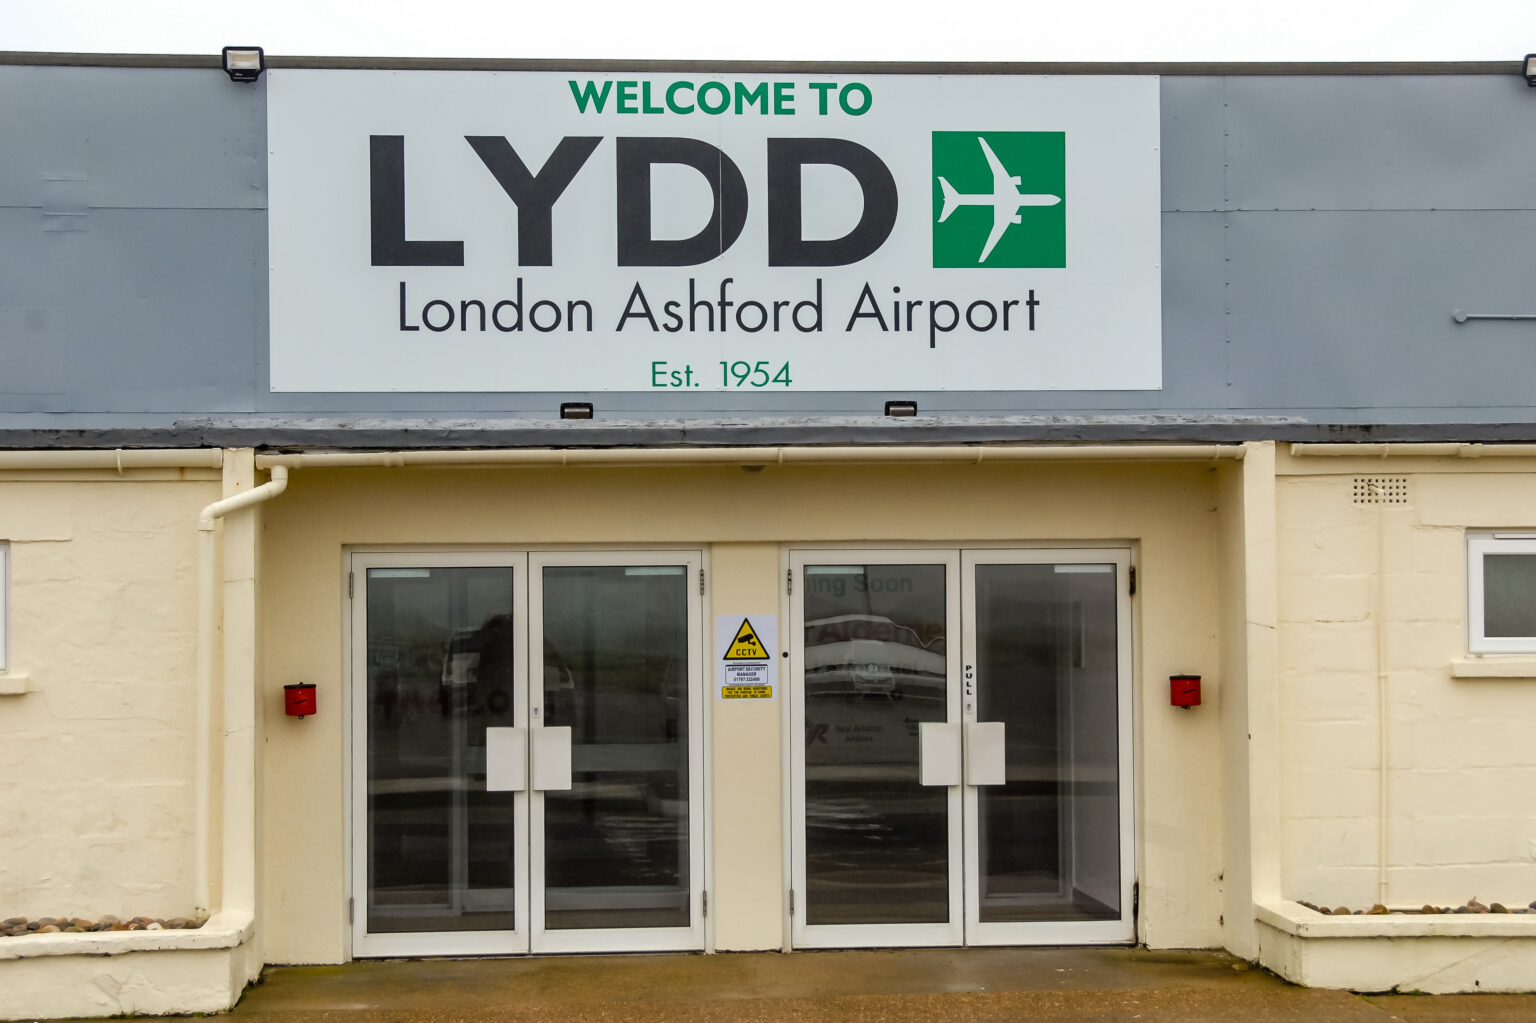 LYDD-AIRPORT-5-1536x1023.jpg